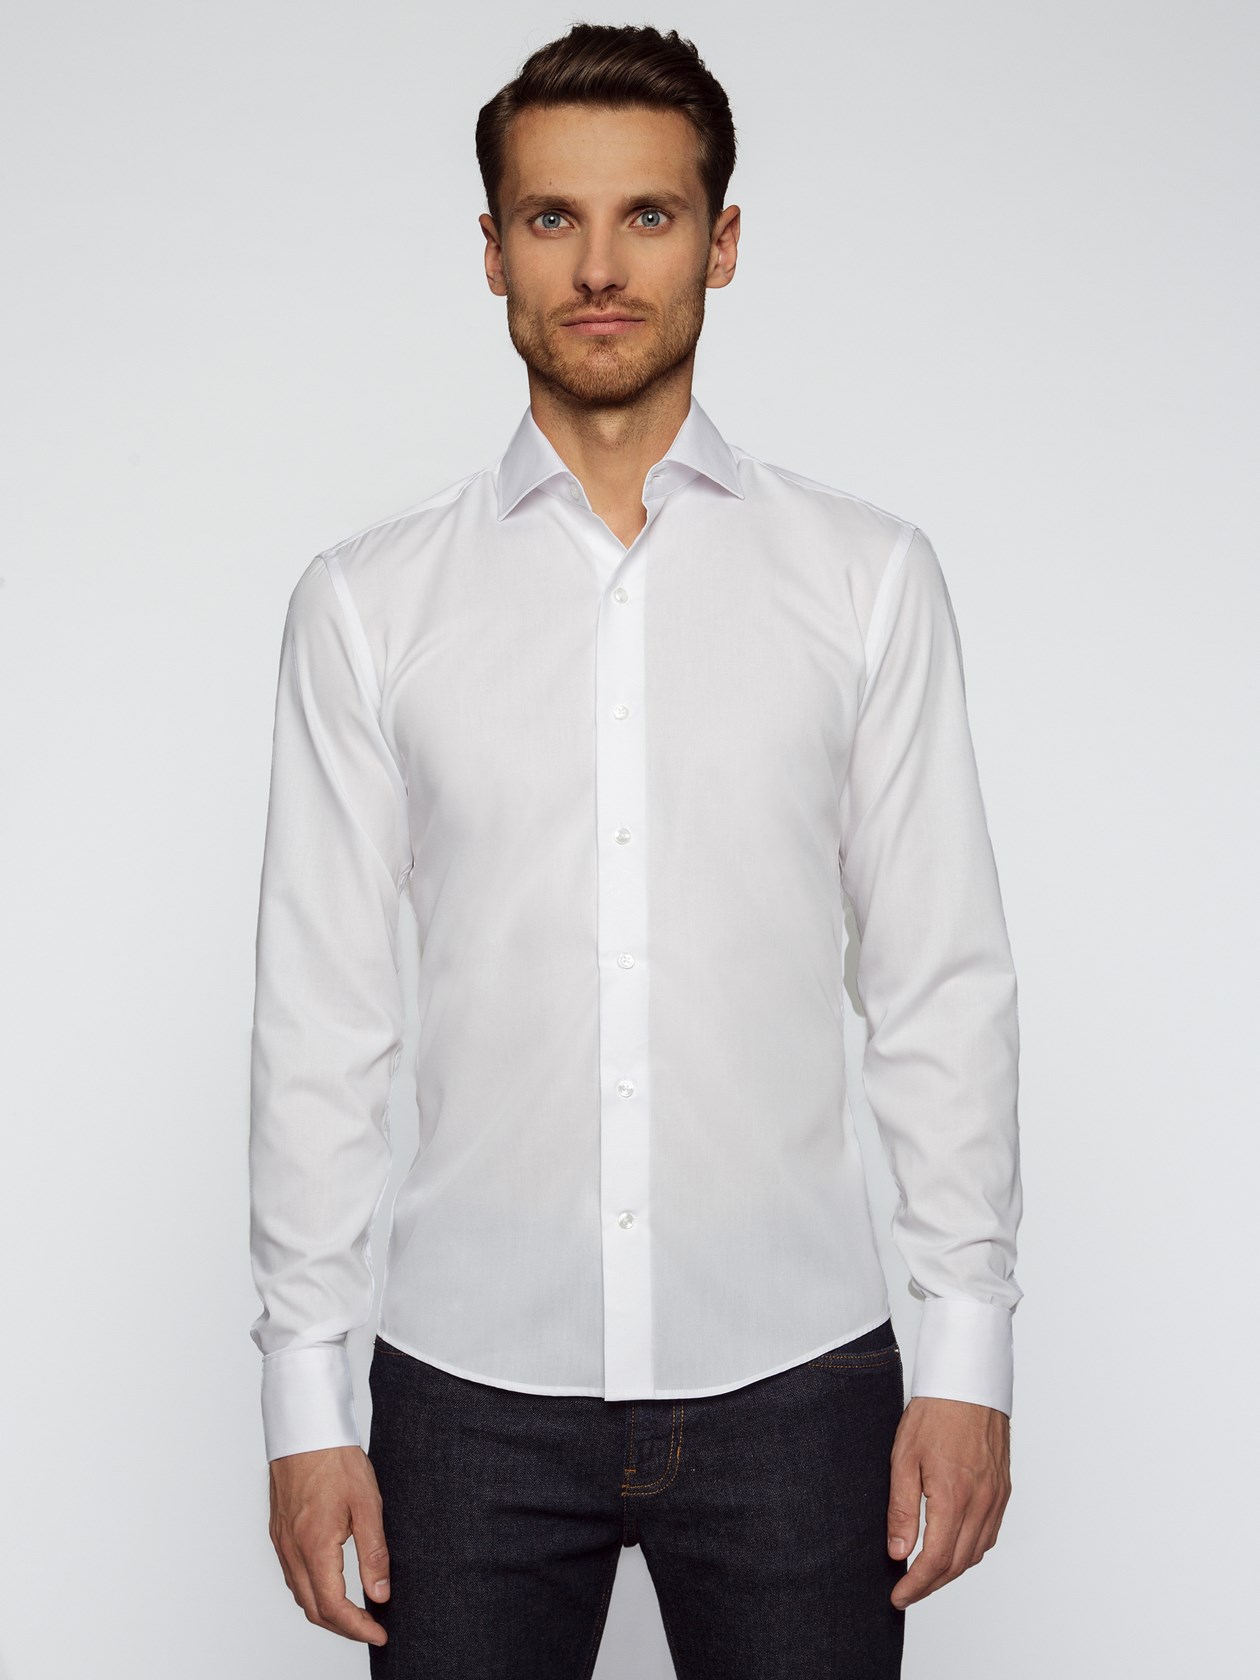 Pima Cotton - White, Plain Weave Shirt